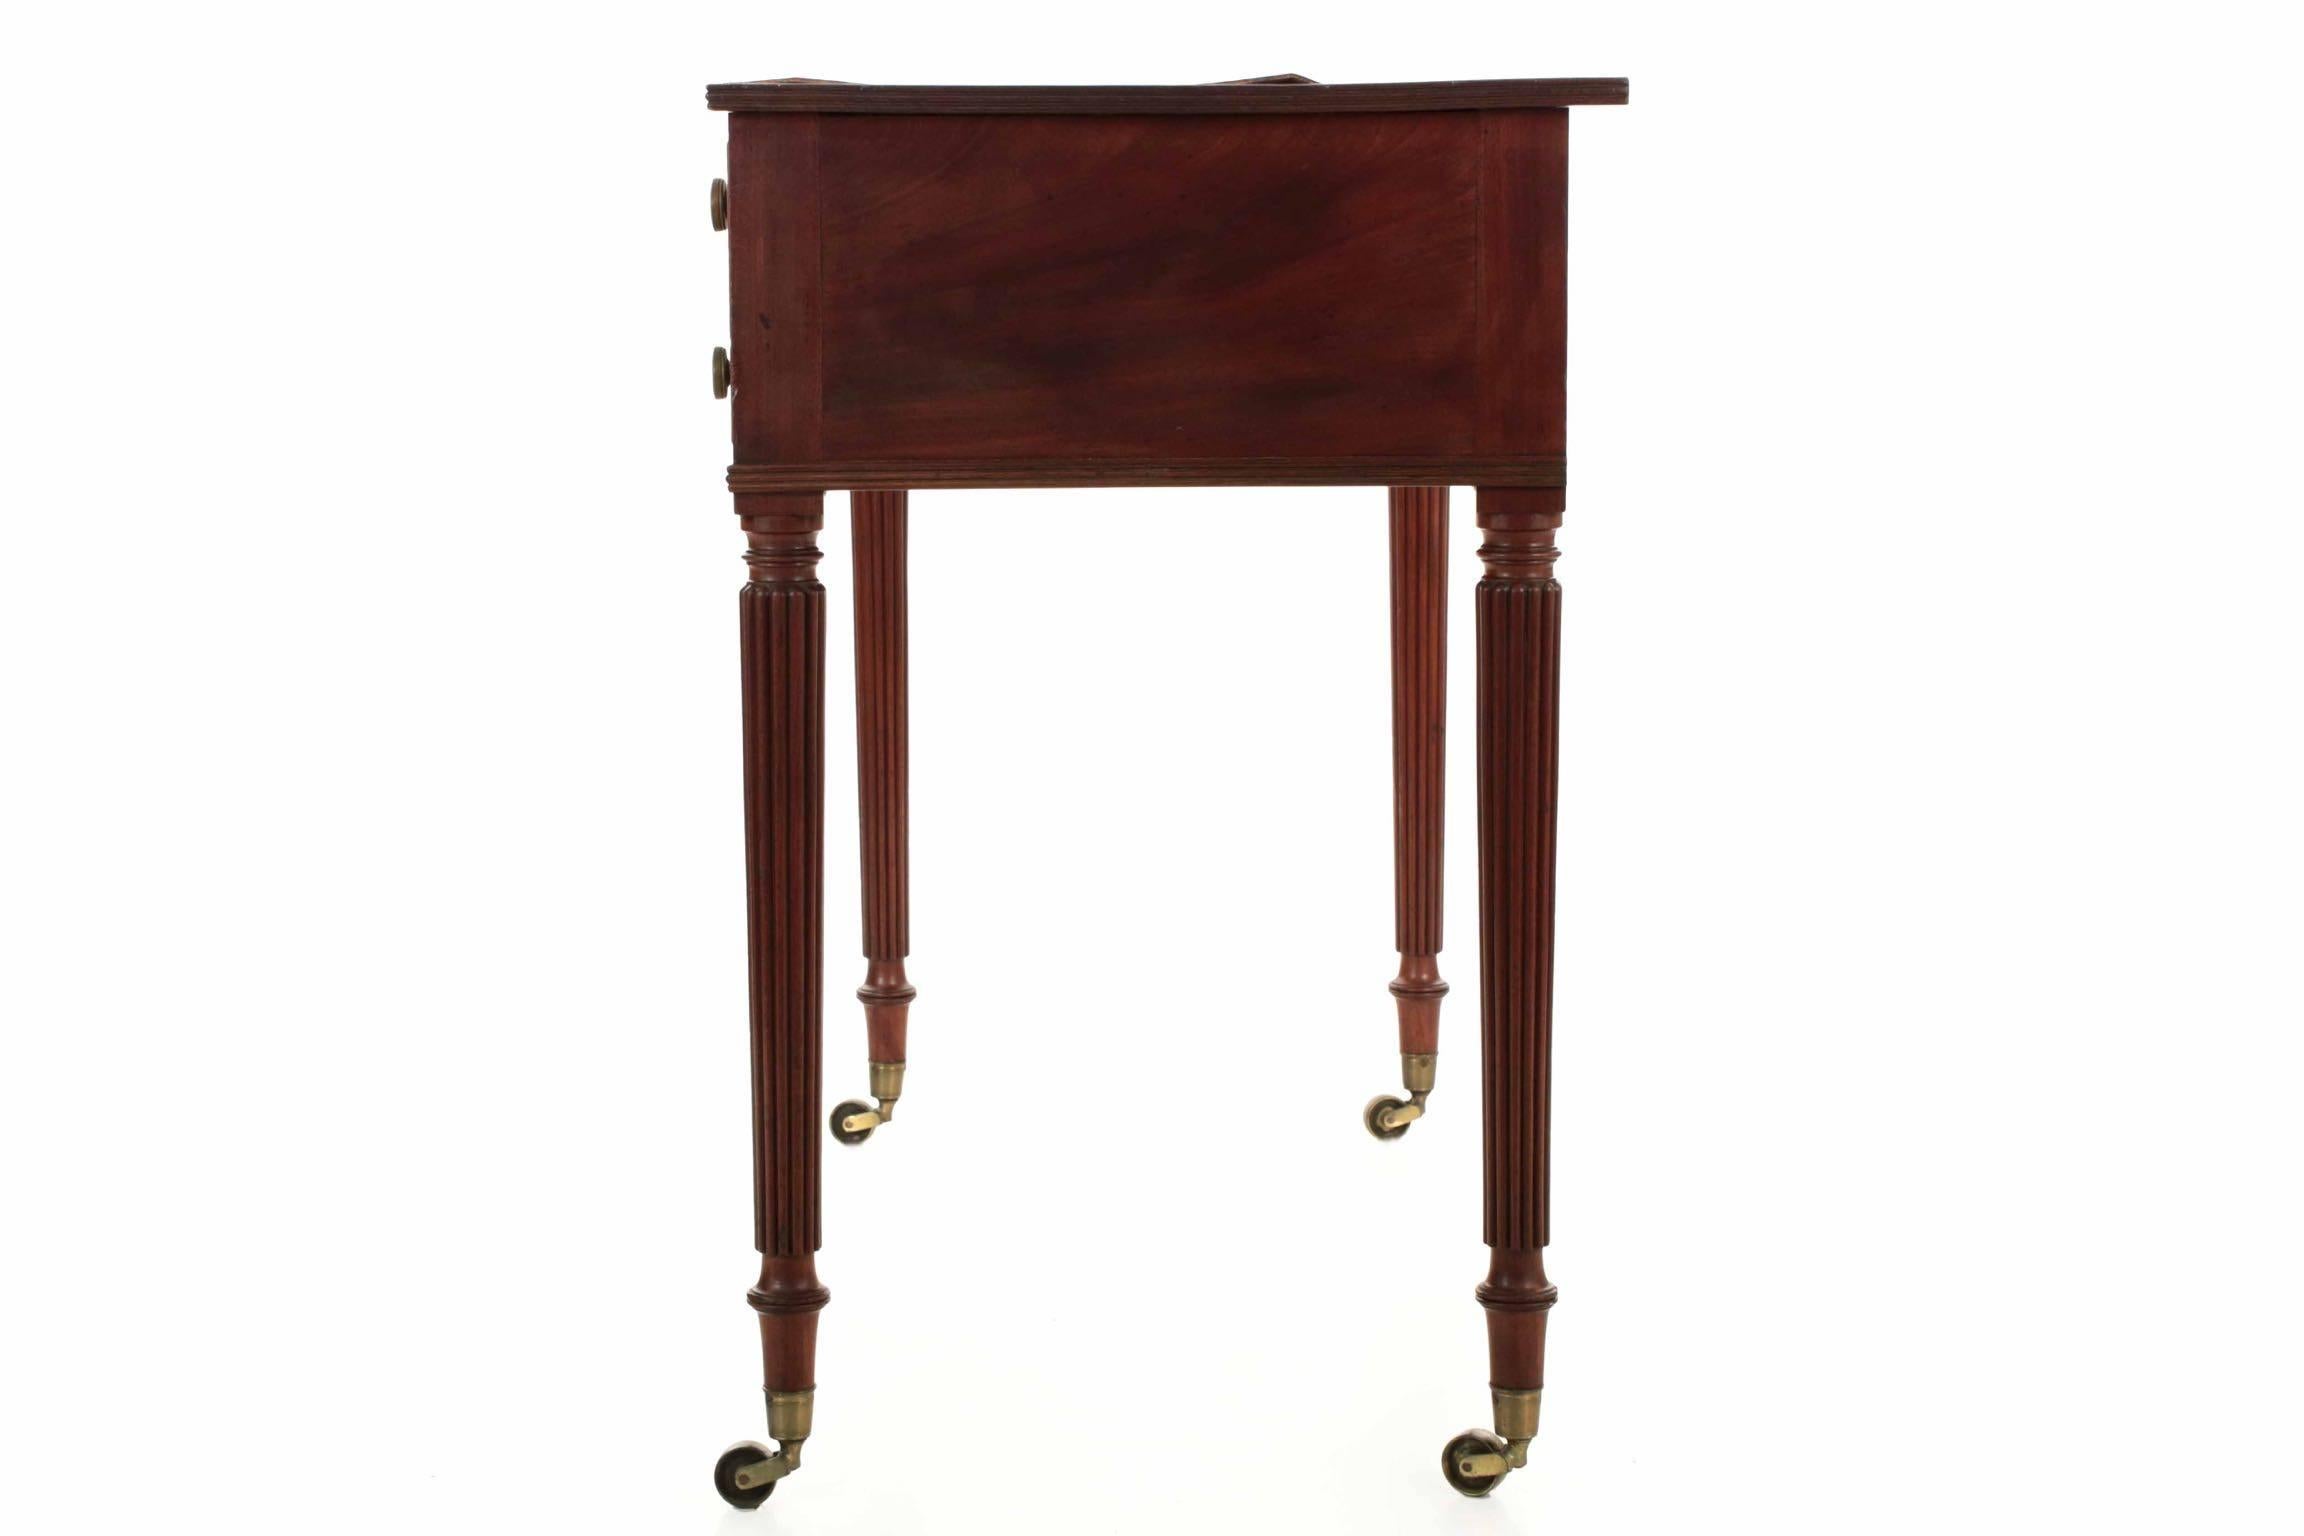 English Regency Period Mahogany & Leather Antique Writing Desk Table c. 1815-30 (19. Jahrhundert)